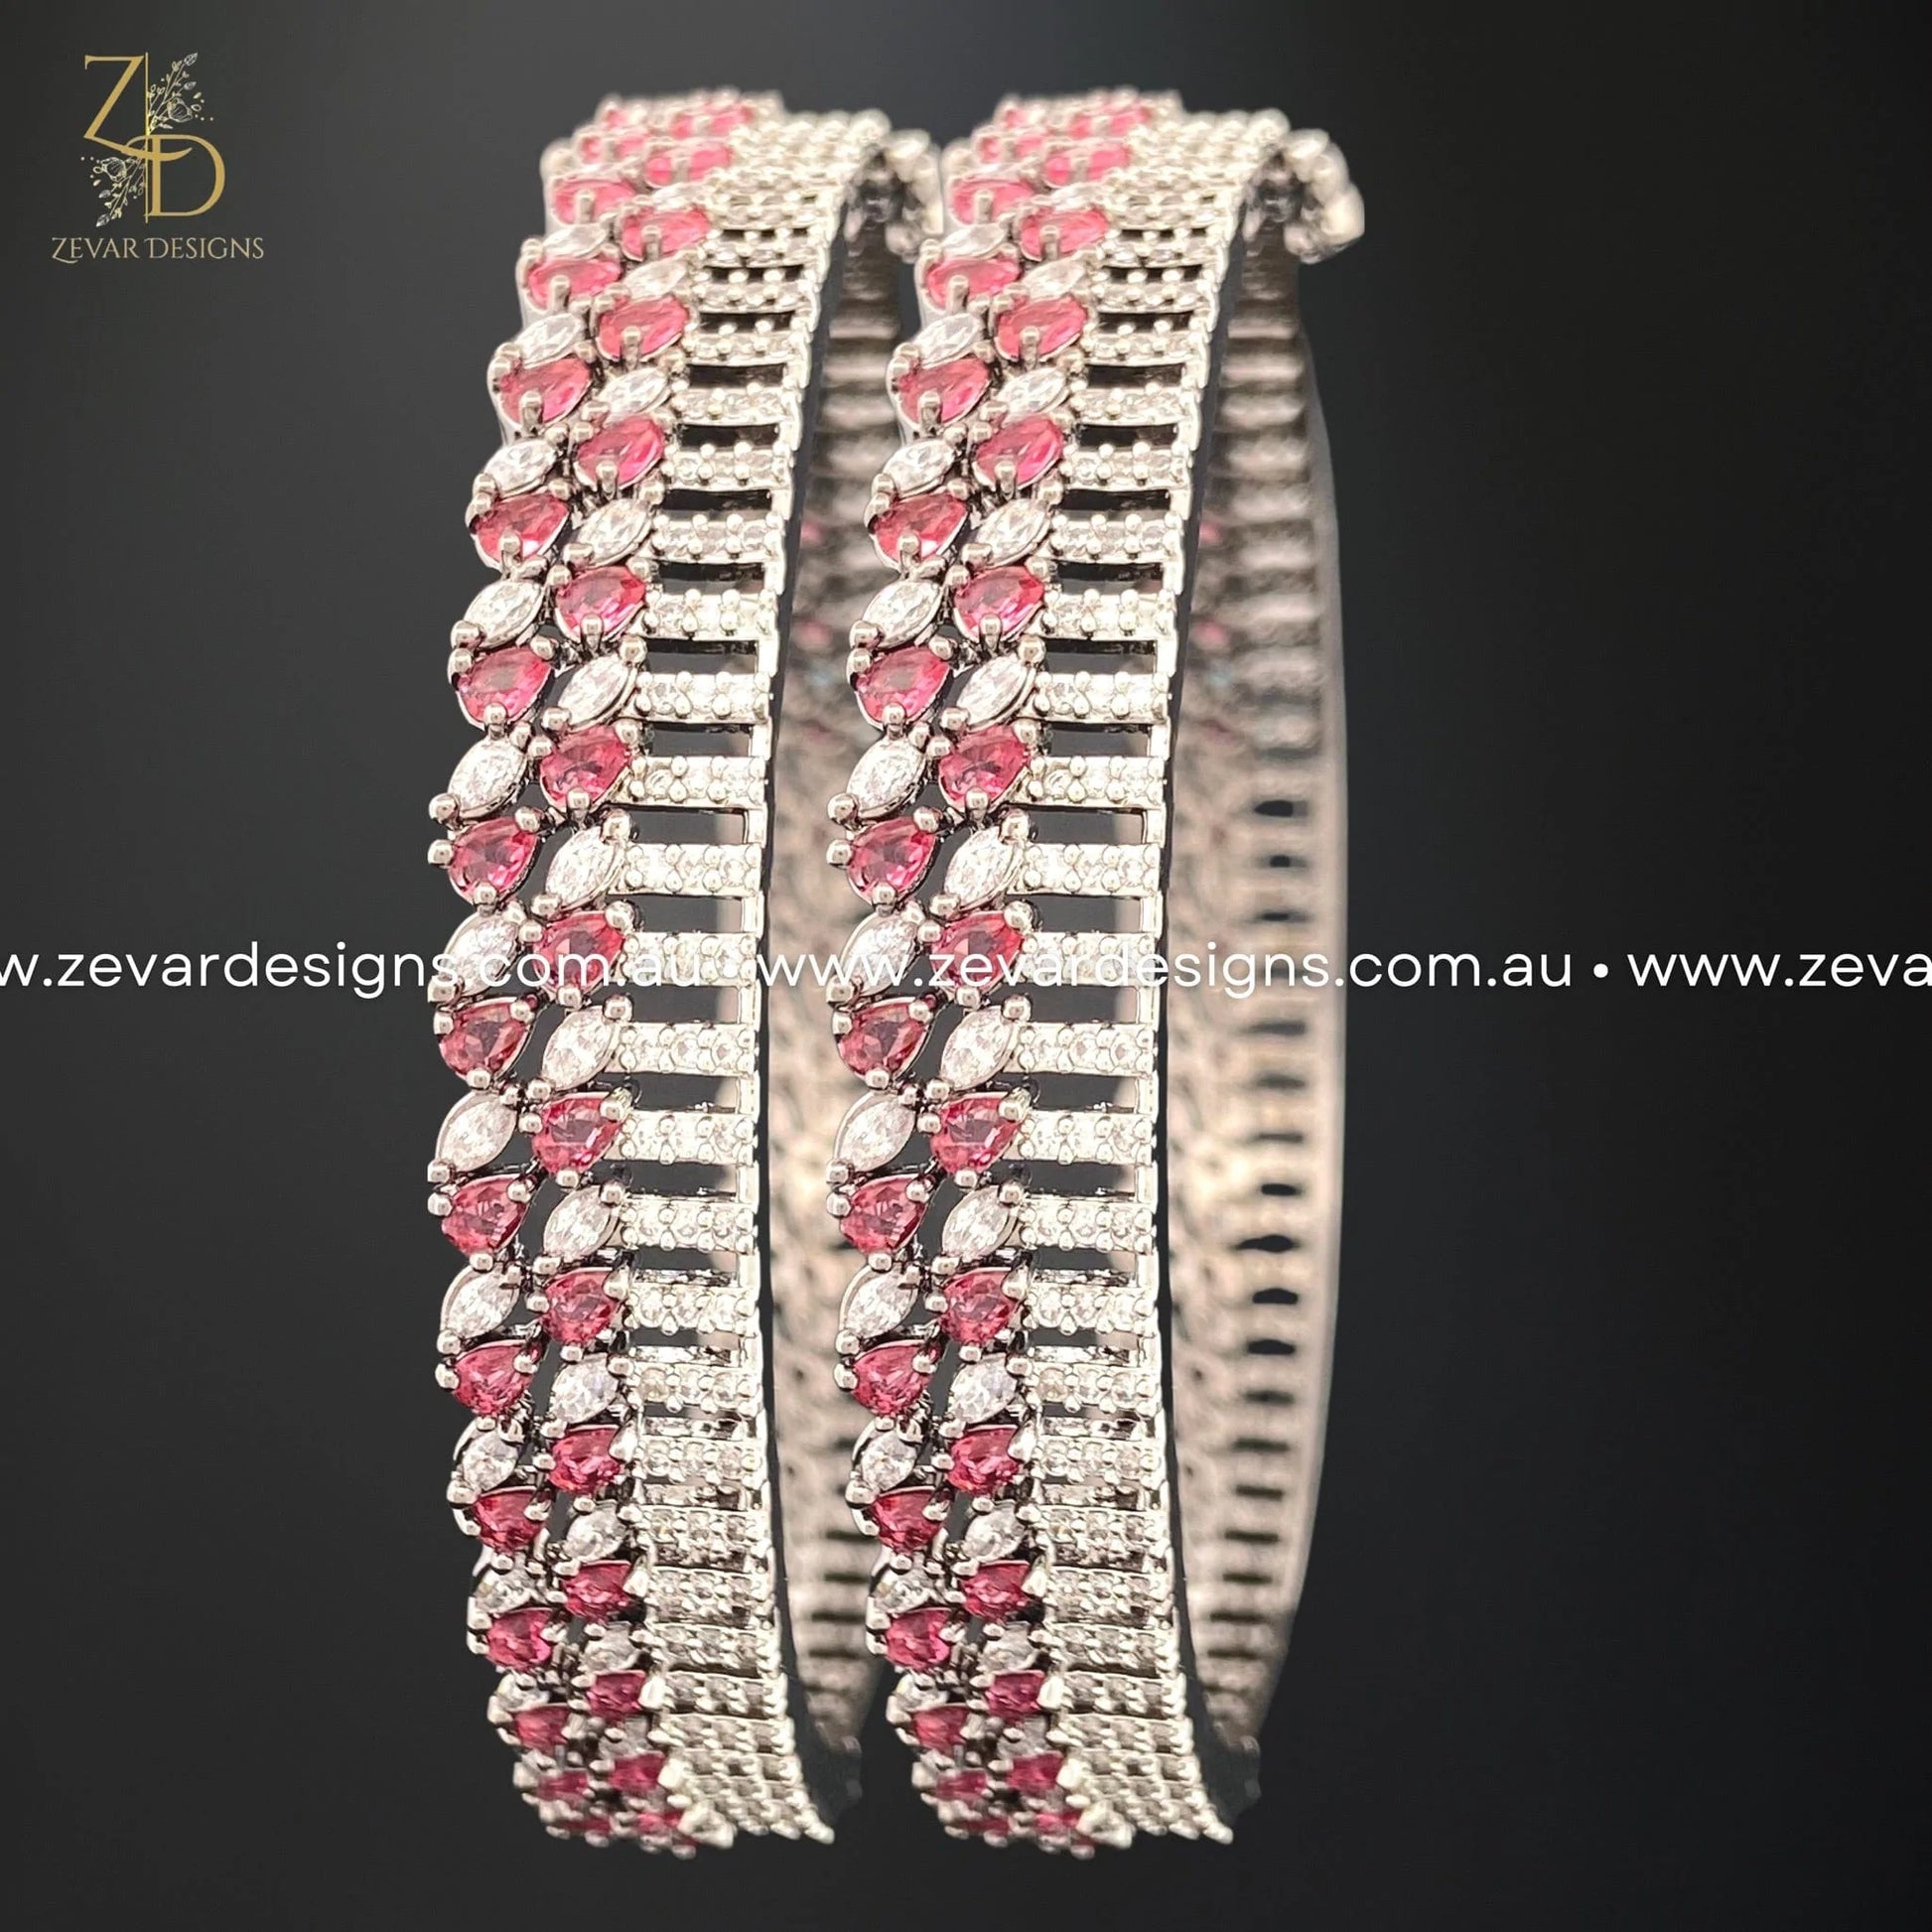 Zevar Designs Bangles & Bracelets - AD AD/Zircon Bangles in Black Rhodium - Ruby